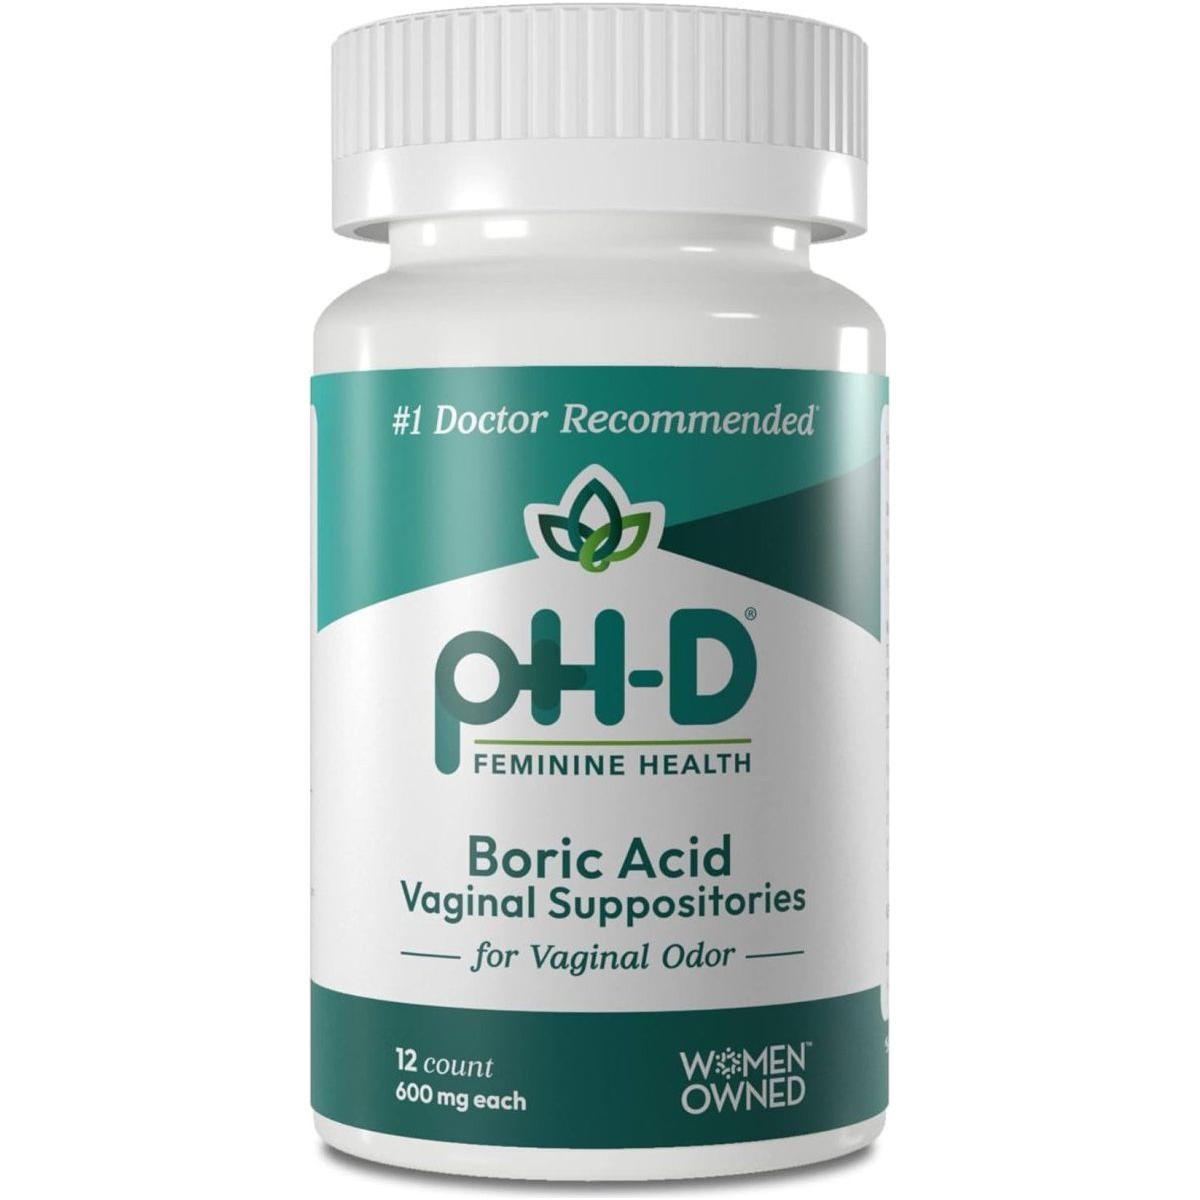 Ph-D Feminine Health - 600 Mg Boric Acid Suppositories for Vaginal Odor Use - Glam Global UK